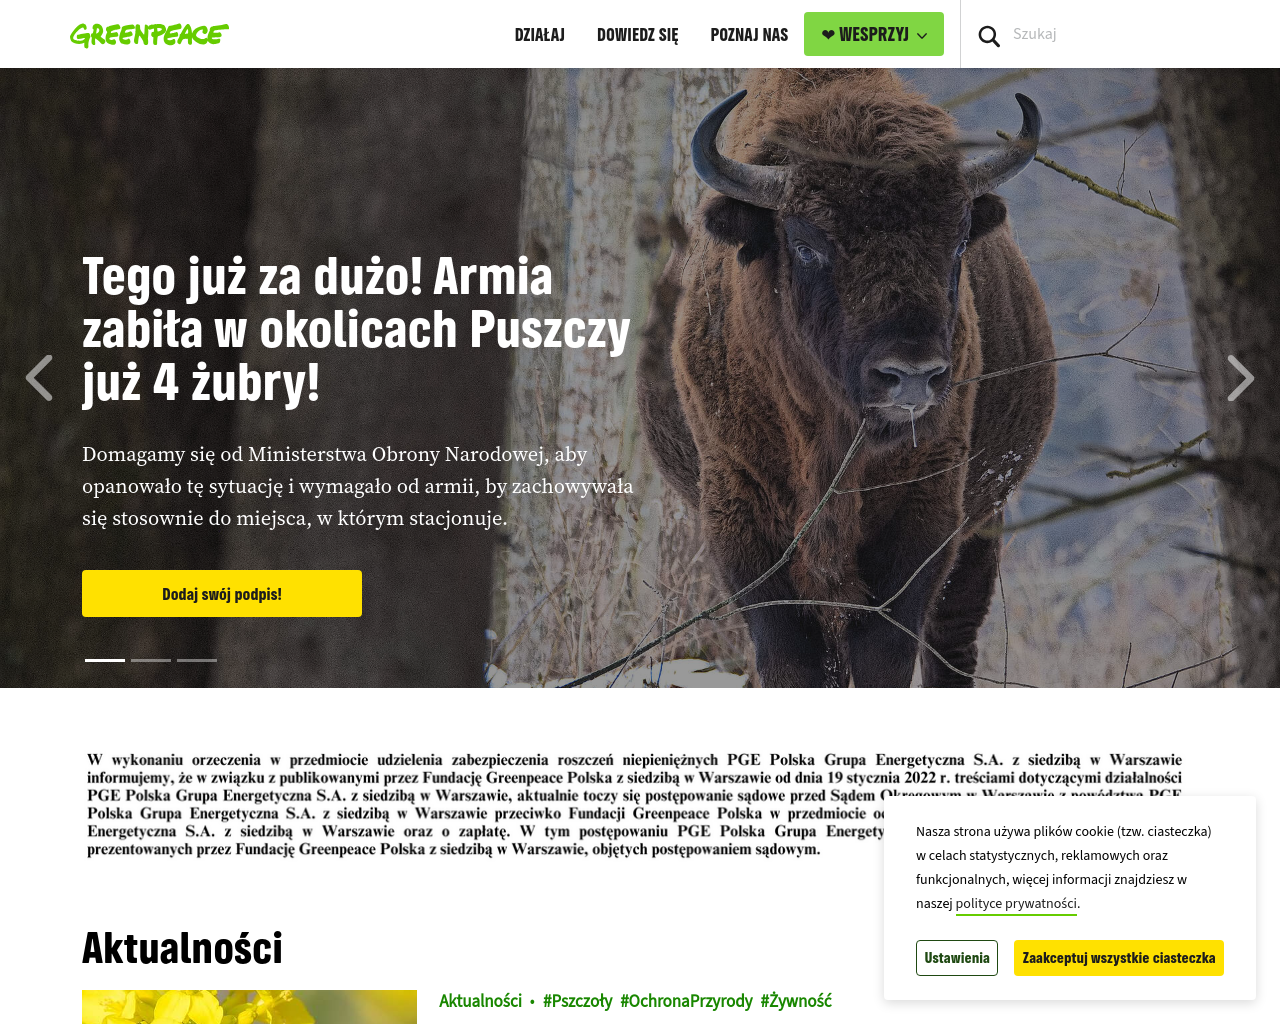 greenpeace.pl